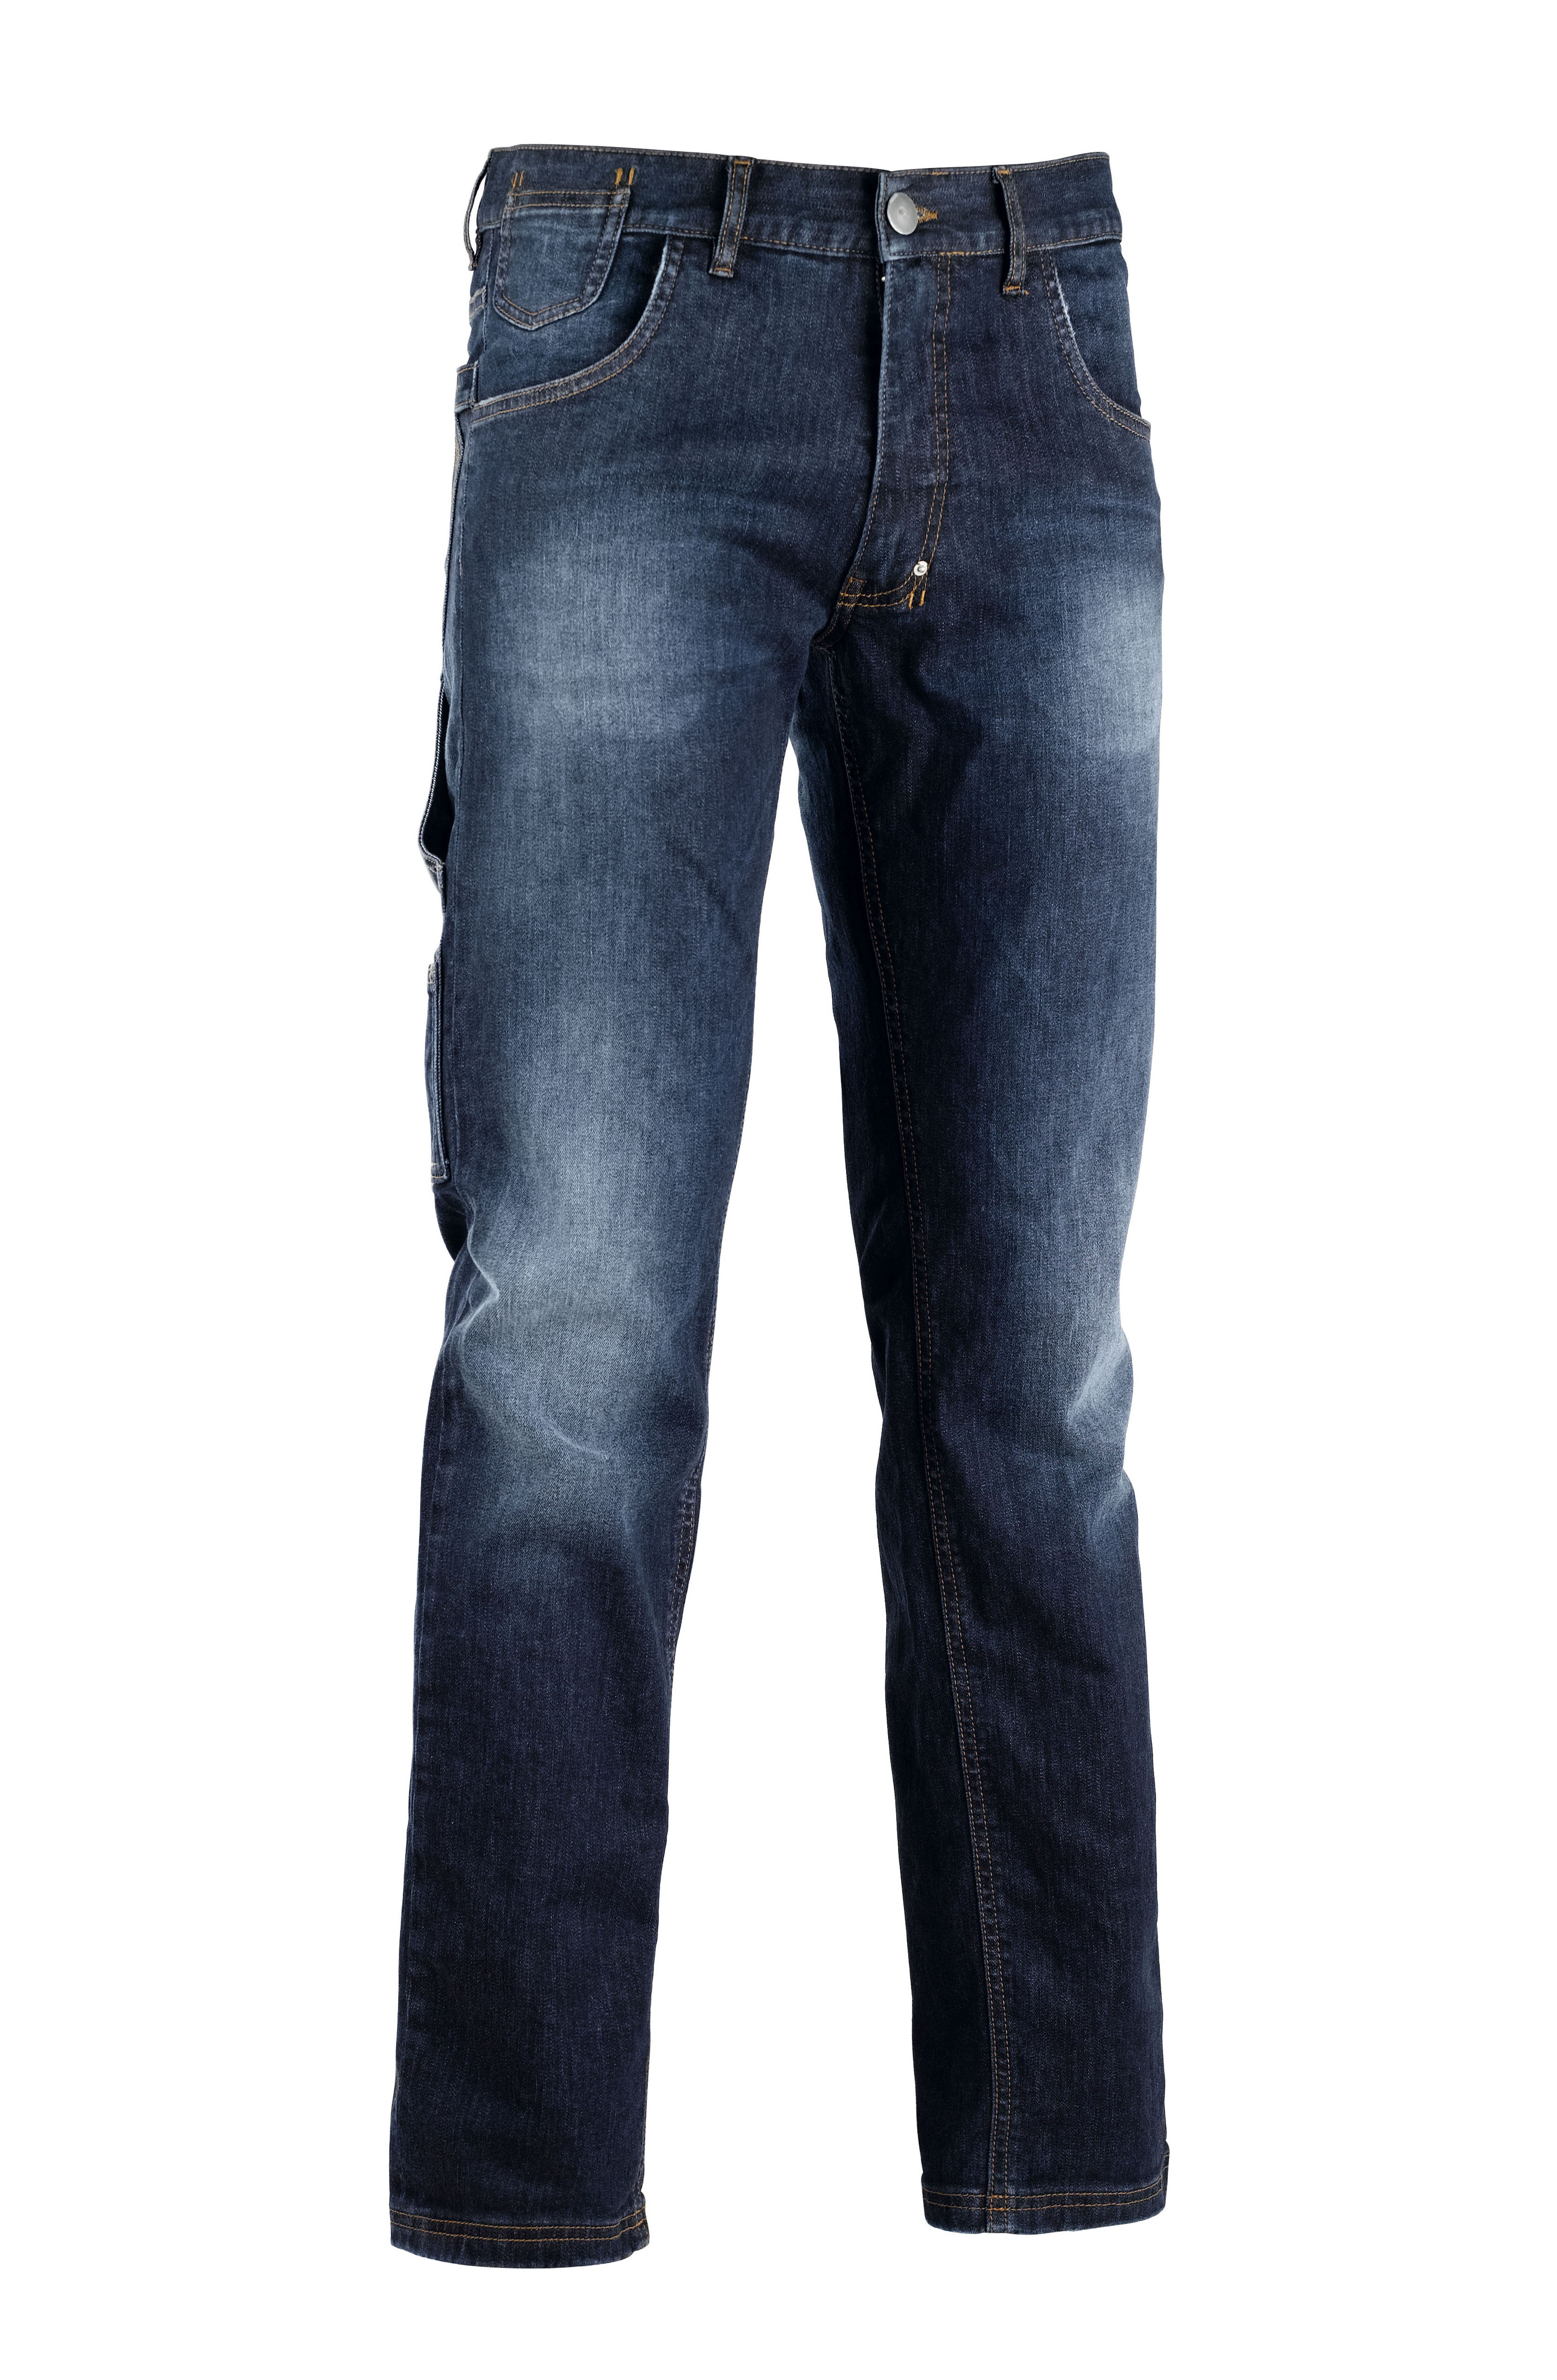 Pantalone stone blu jeans lavato tg xxl